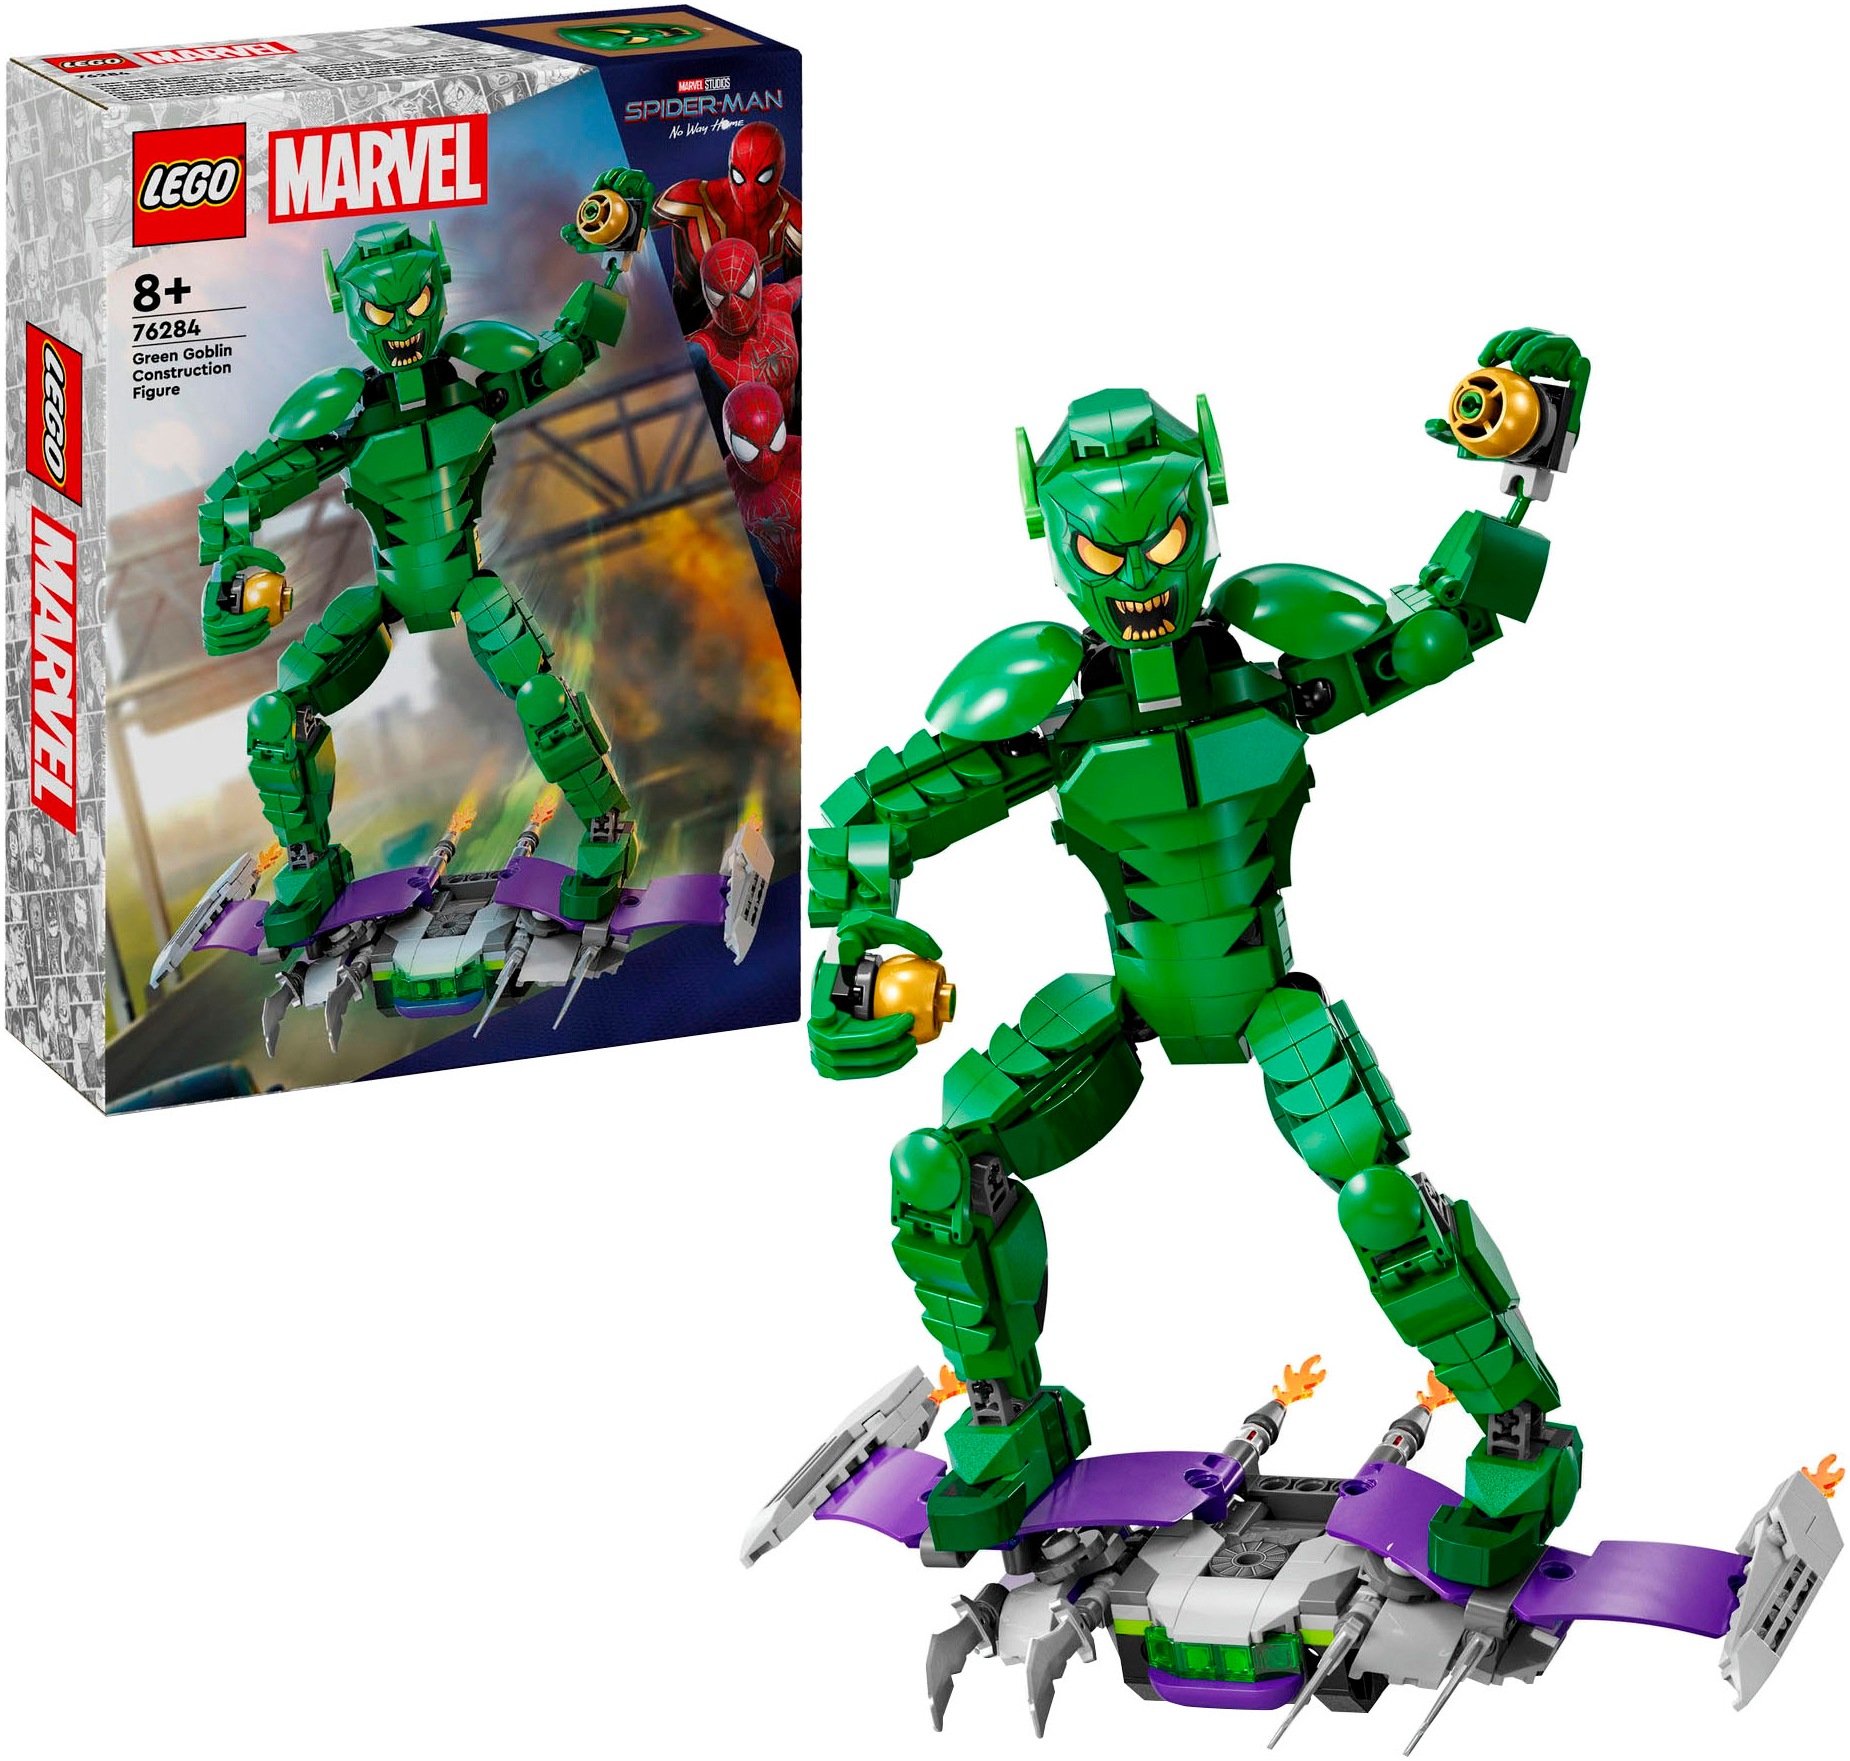 Konstruktionsspielsteine »Green Goblin Baufigur (76284), LEGO Super Heroes«, (471...